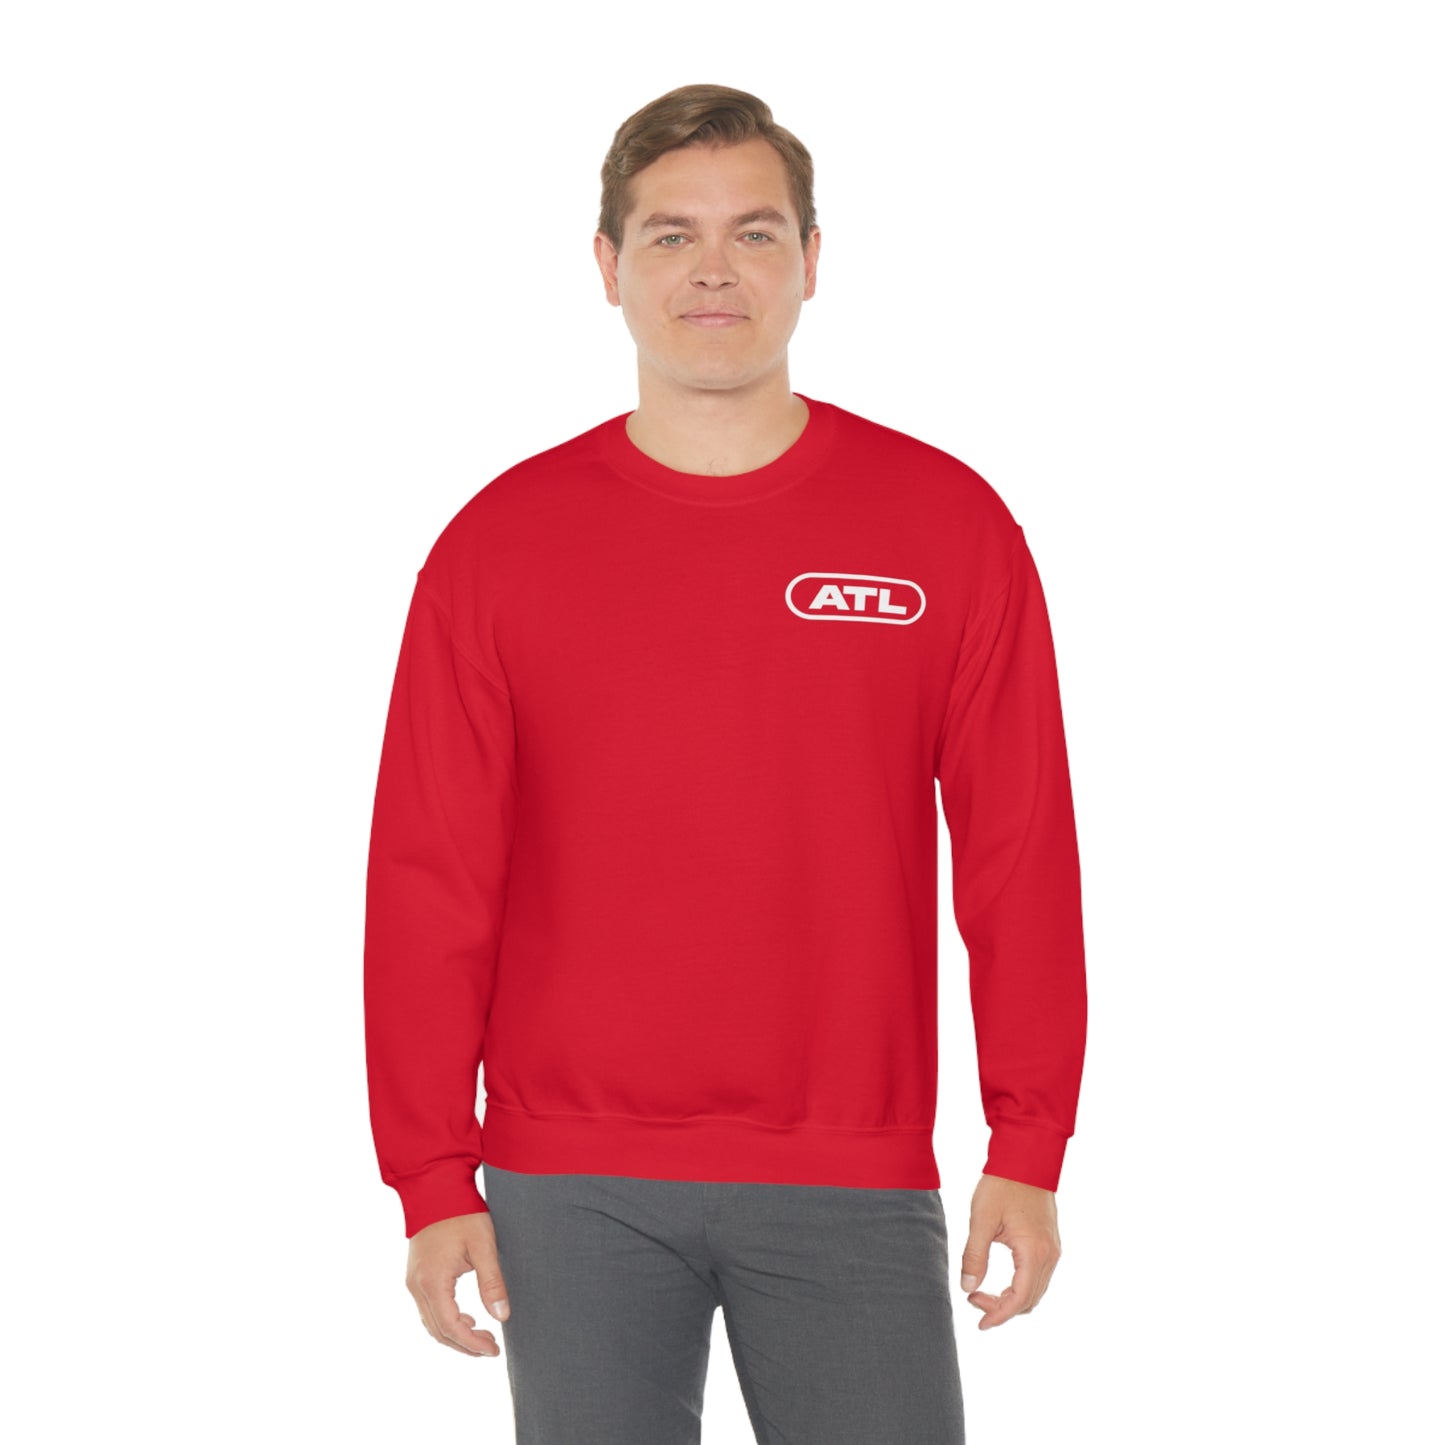 ATL Crewneck Sweatshirt